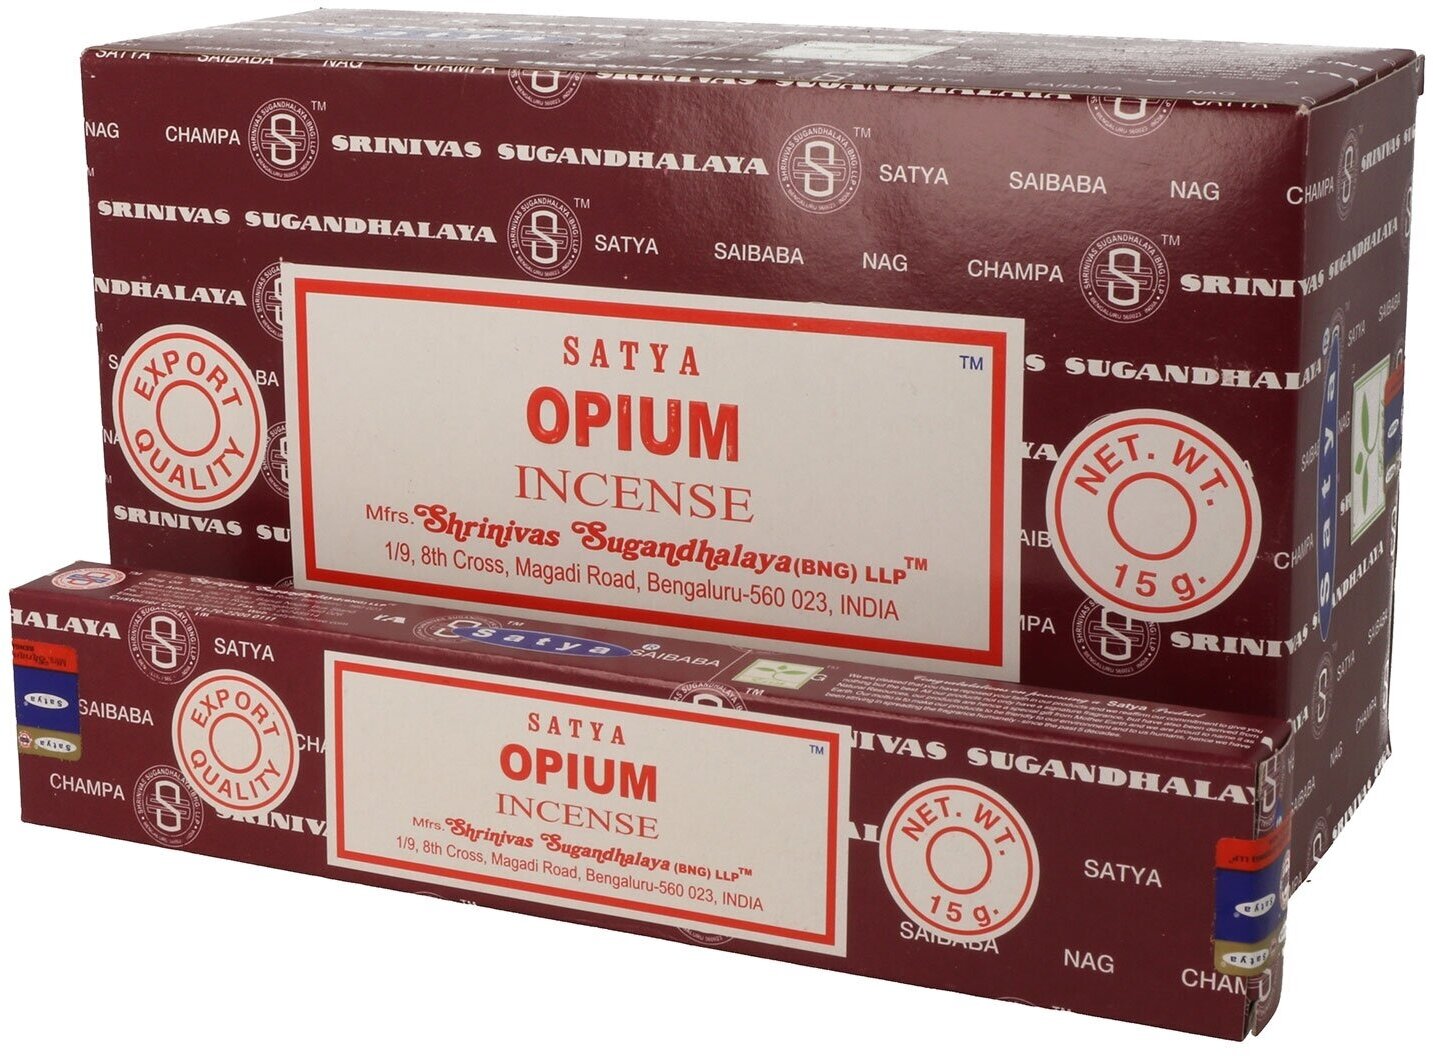 Ароматические палочки - благовония SATYA Опиум (Opium) 15г.